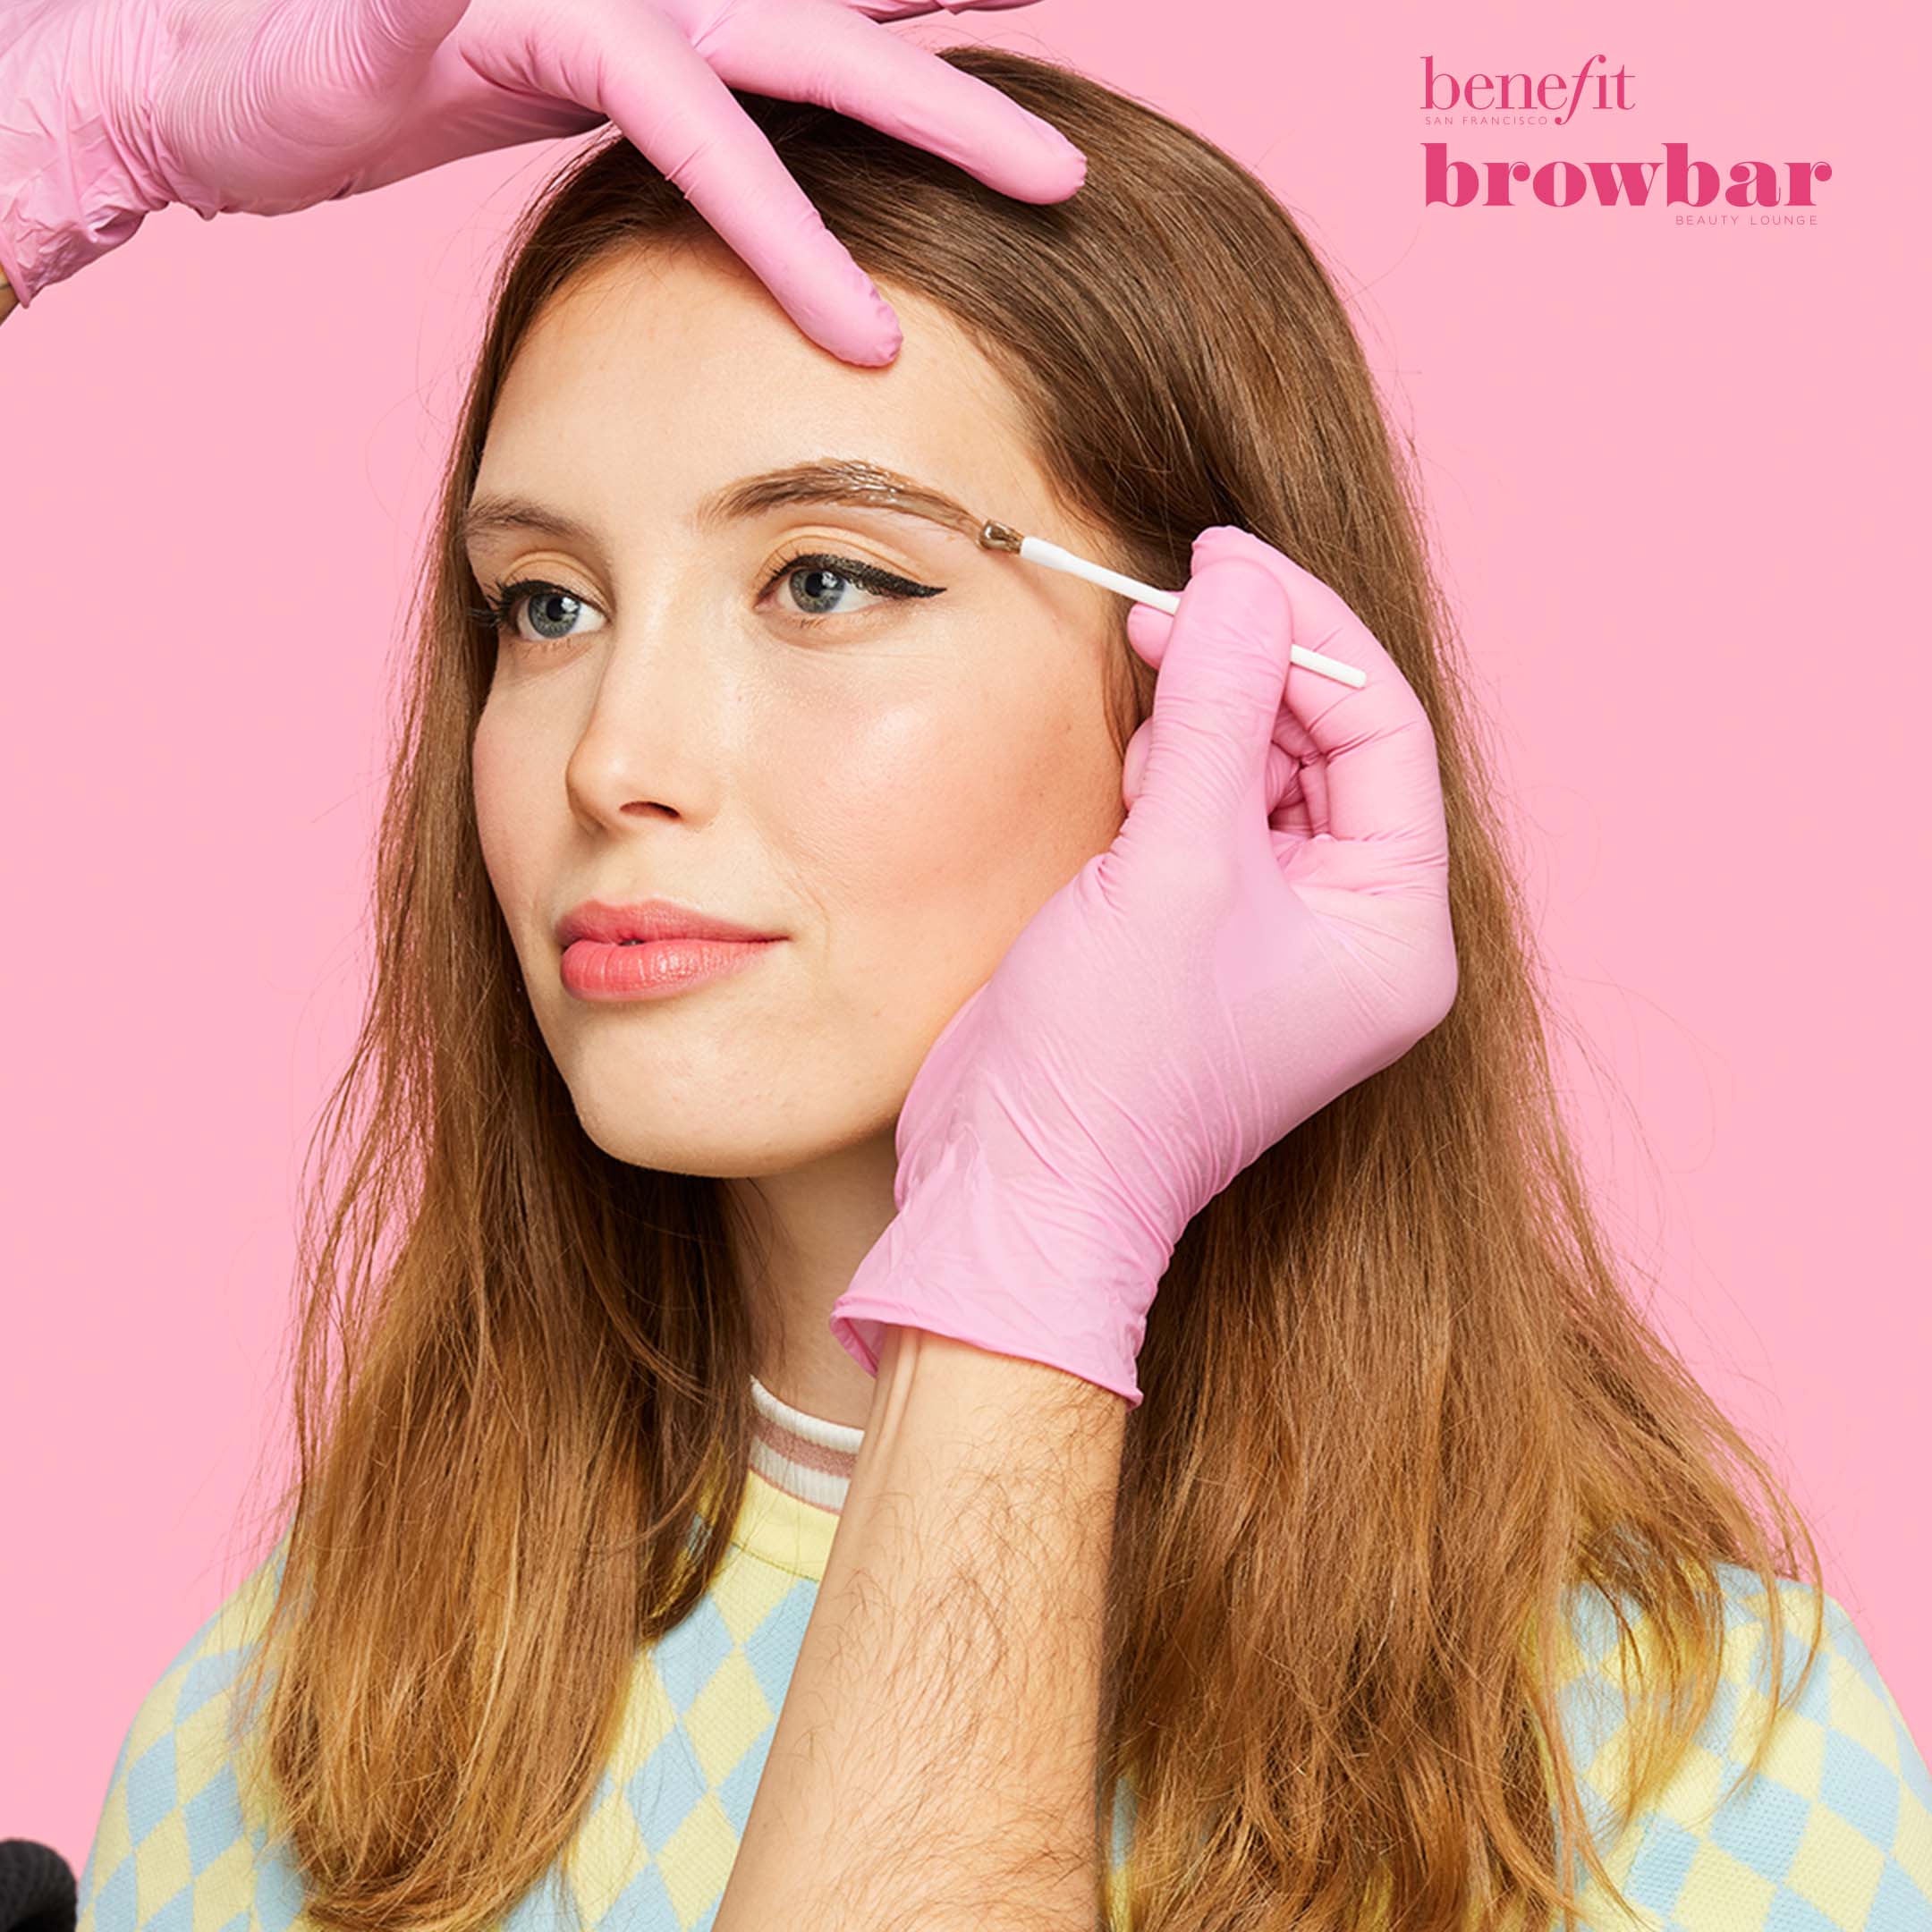 Images Benefit Cosmetics Boutique & BrowBar lounge